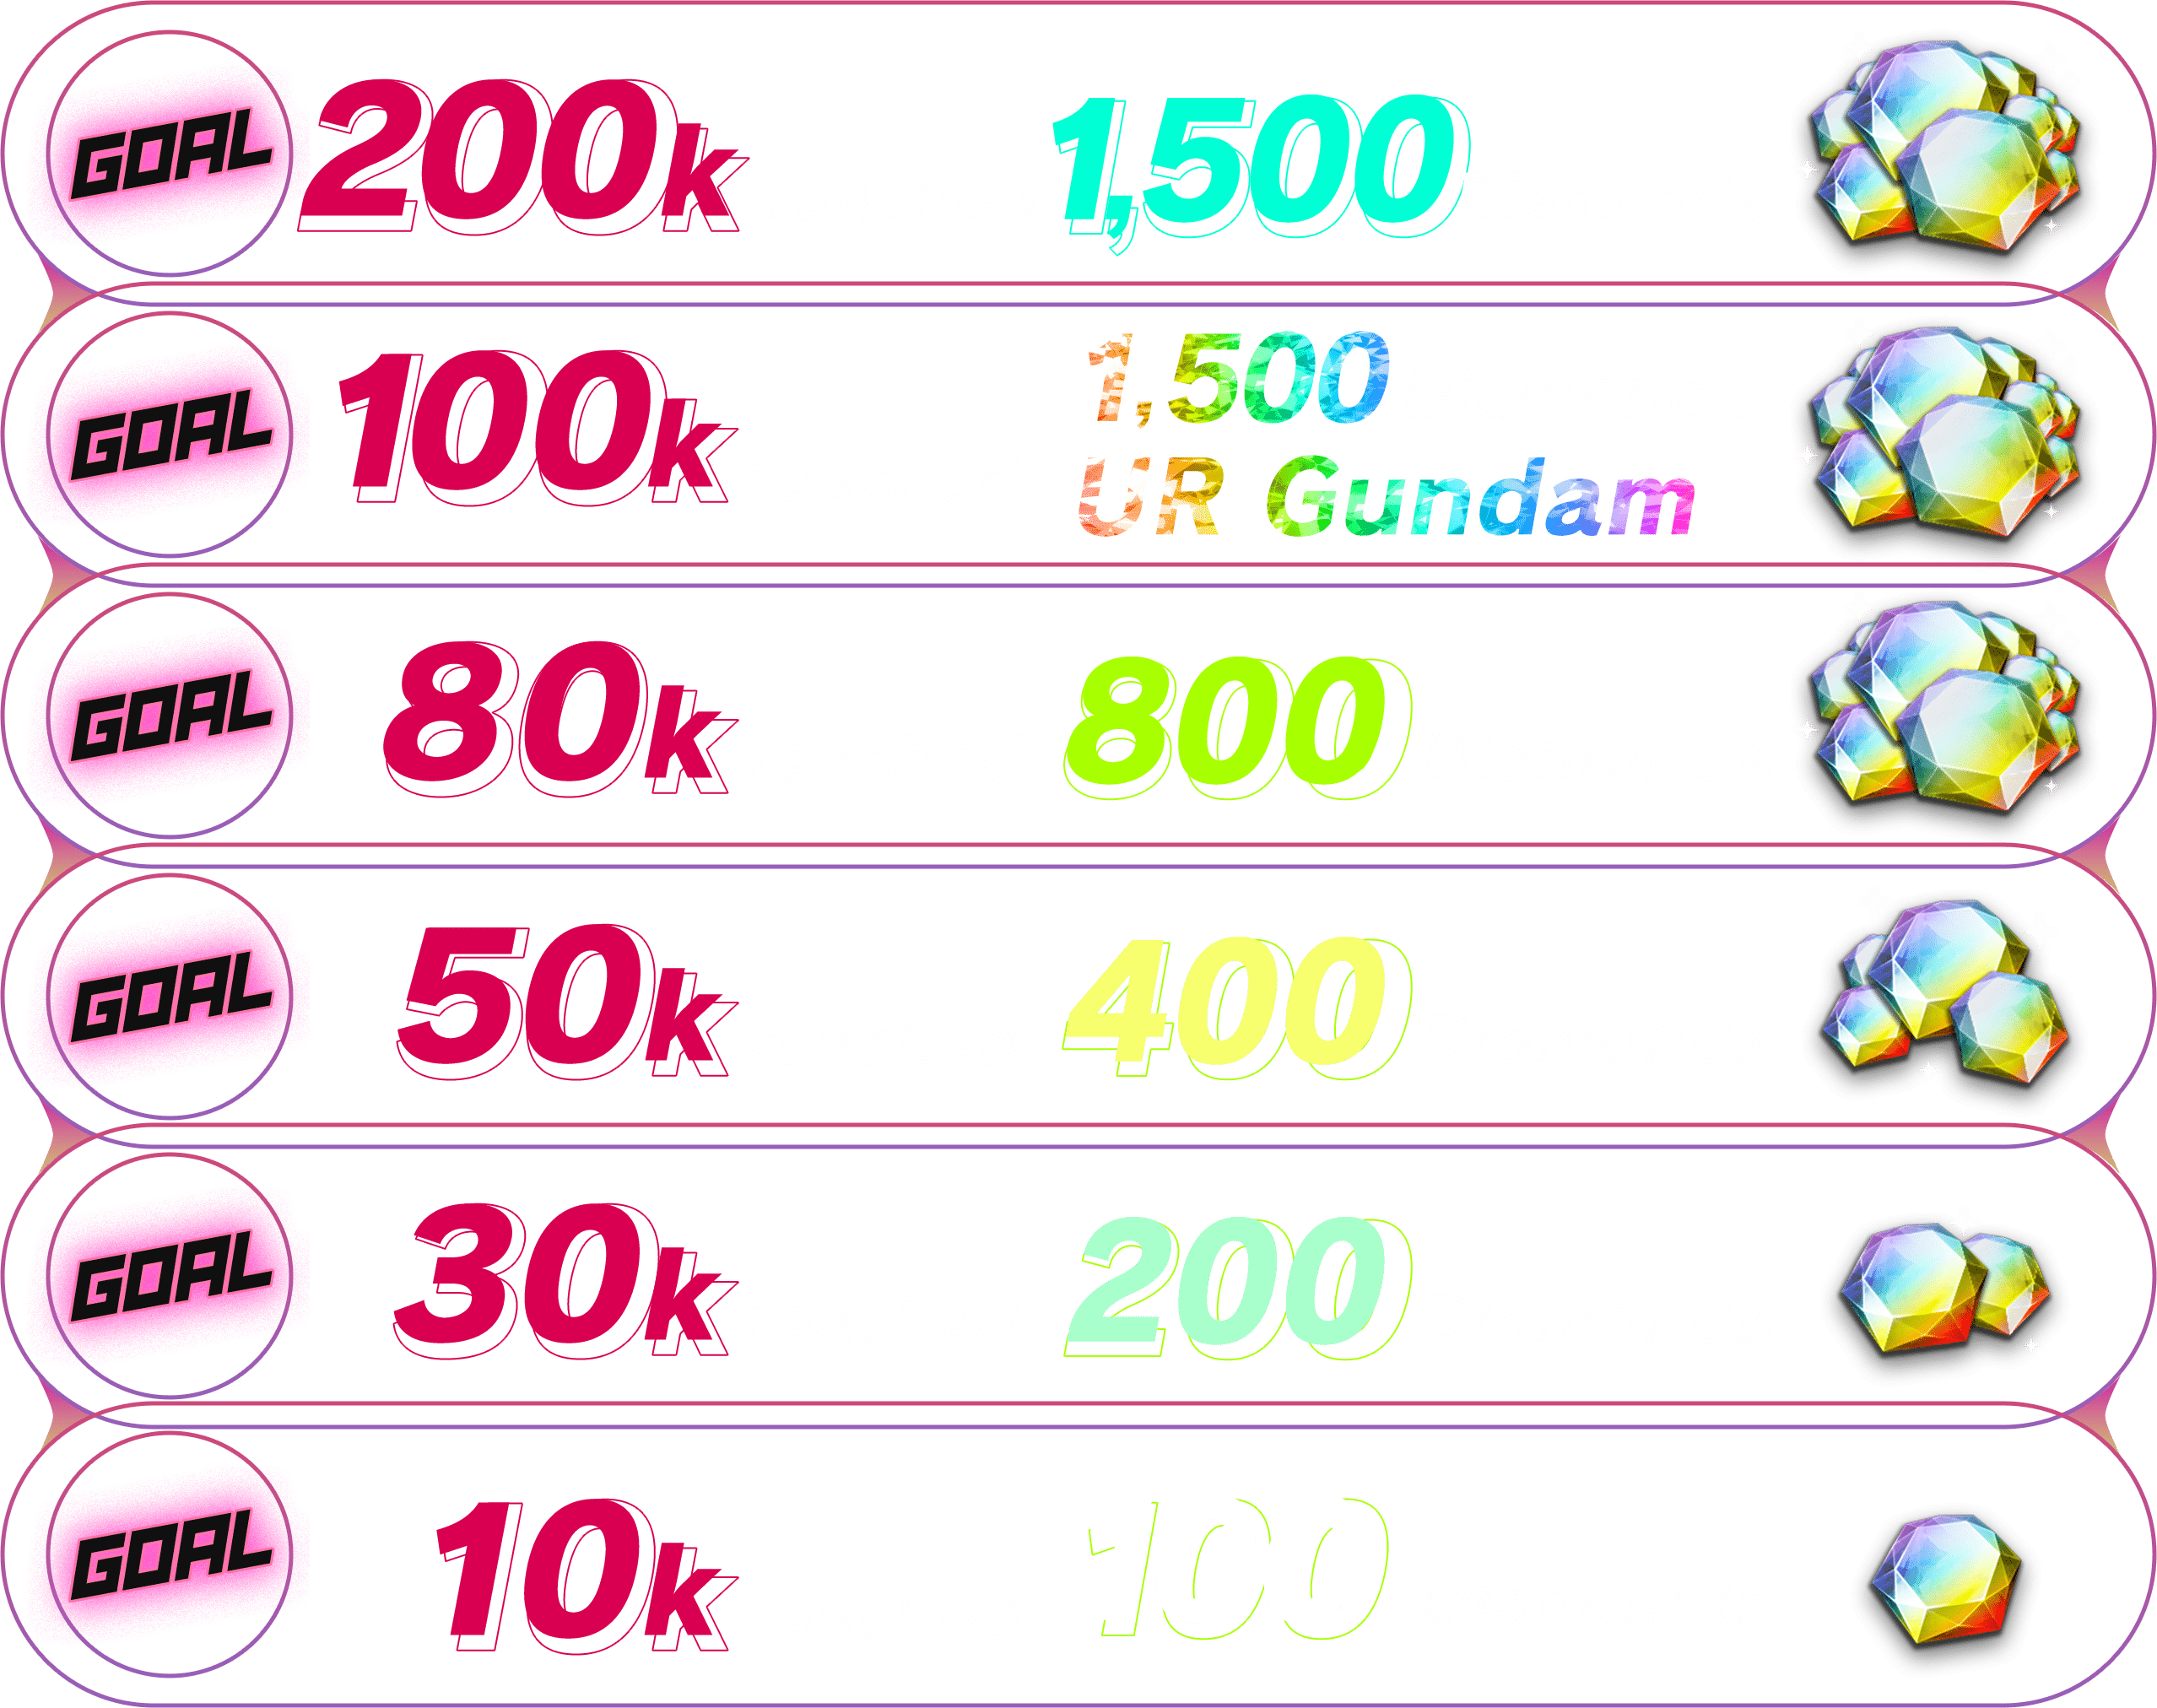 200k reached 1,500 Diamonds
        100K reached 1,500 Diamonds UR Gundam
        80K reached 800 Diamonds
        50K reached 400 Diamonds
        30K reached 200 Diamonds
        10K reached 100 Diamonds